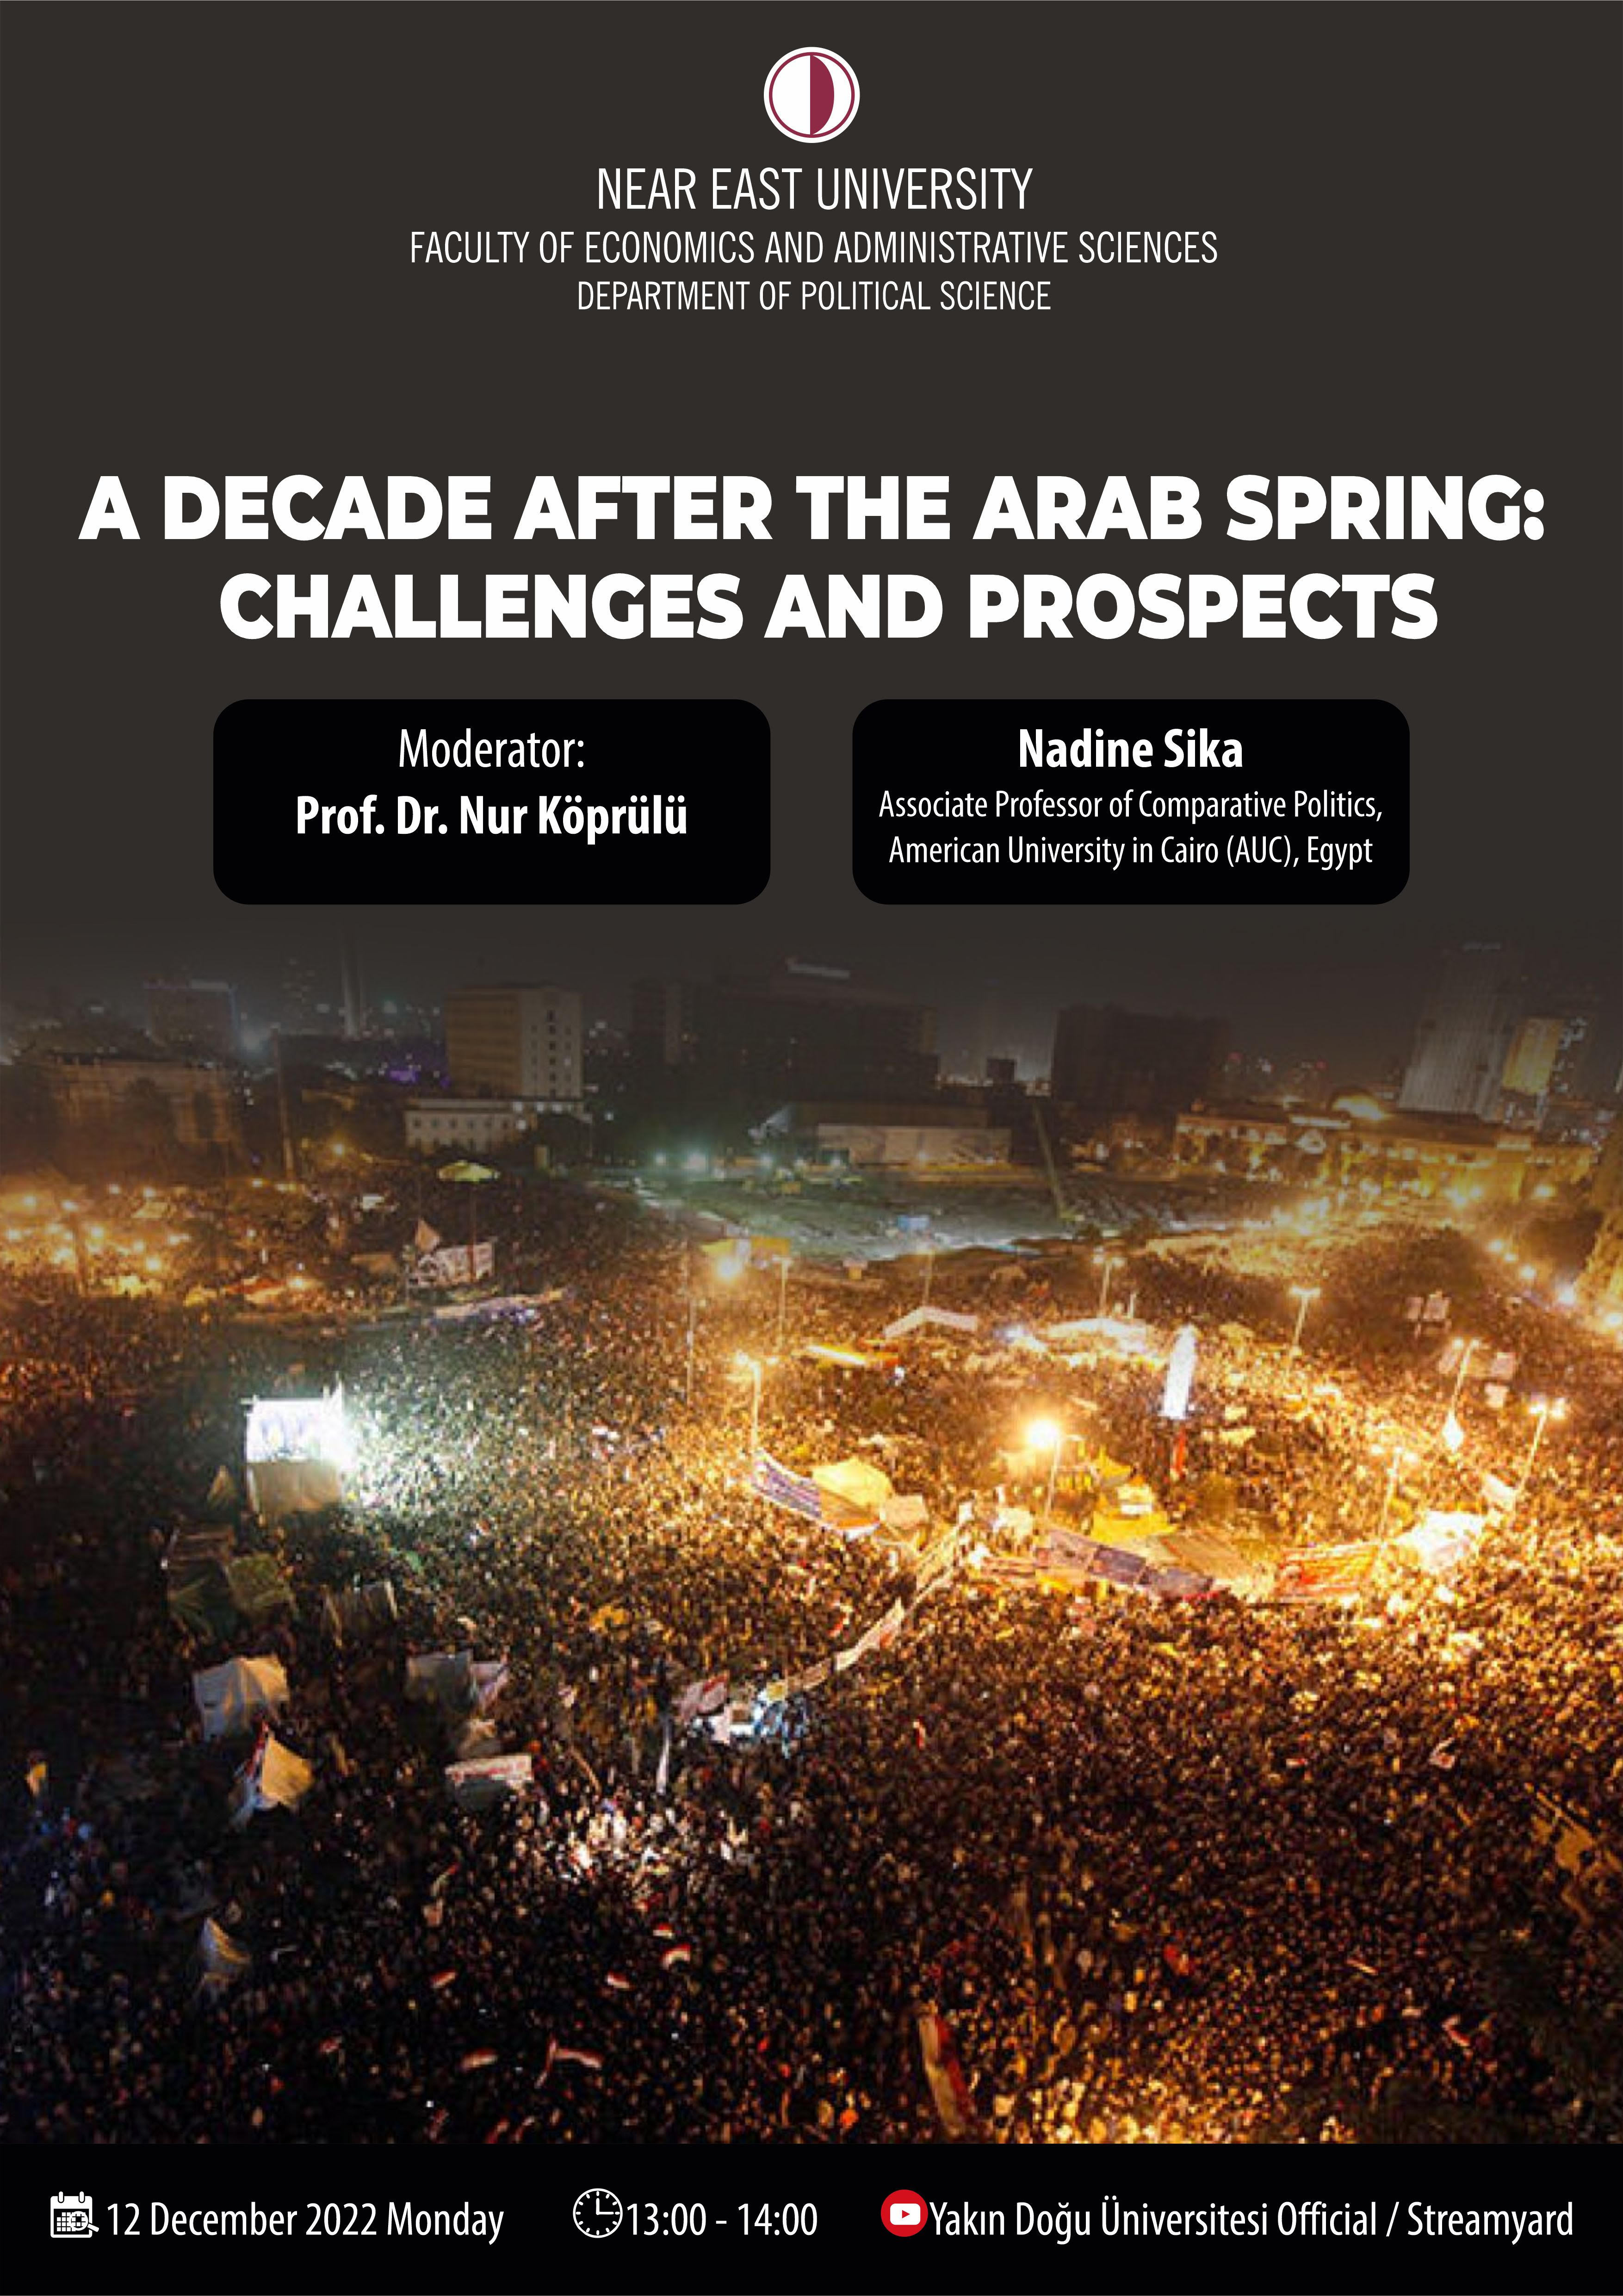 {mlang en}A Decade After The Arab Spring: Challenges and Prospects{mlang}{mlang tr}A Decade After The Arab Spring: Challenges and Prospects{mlang}